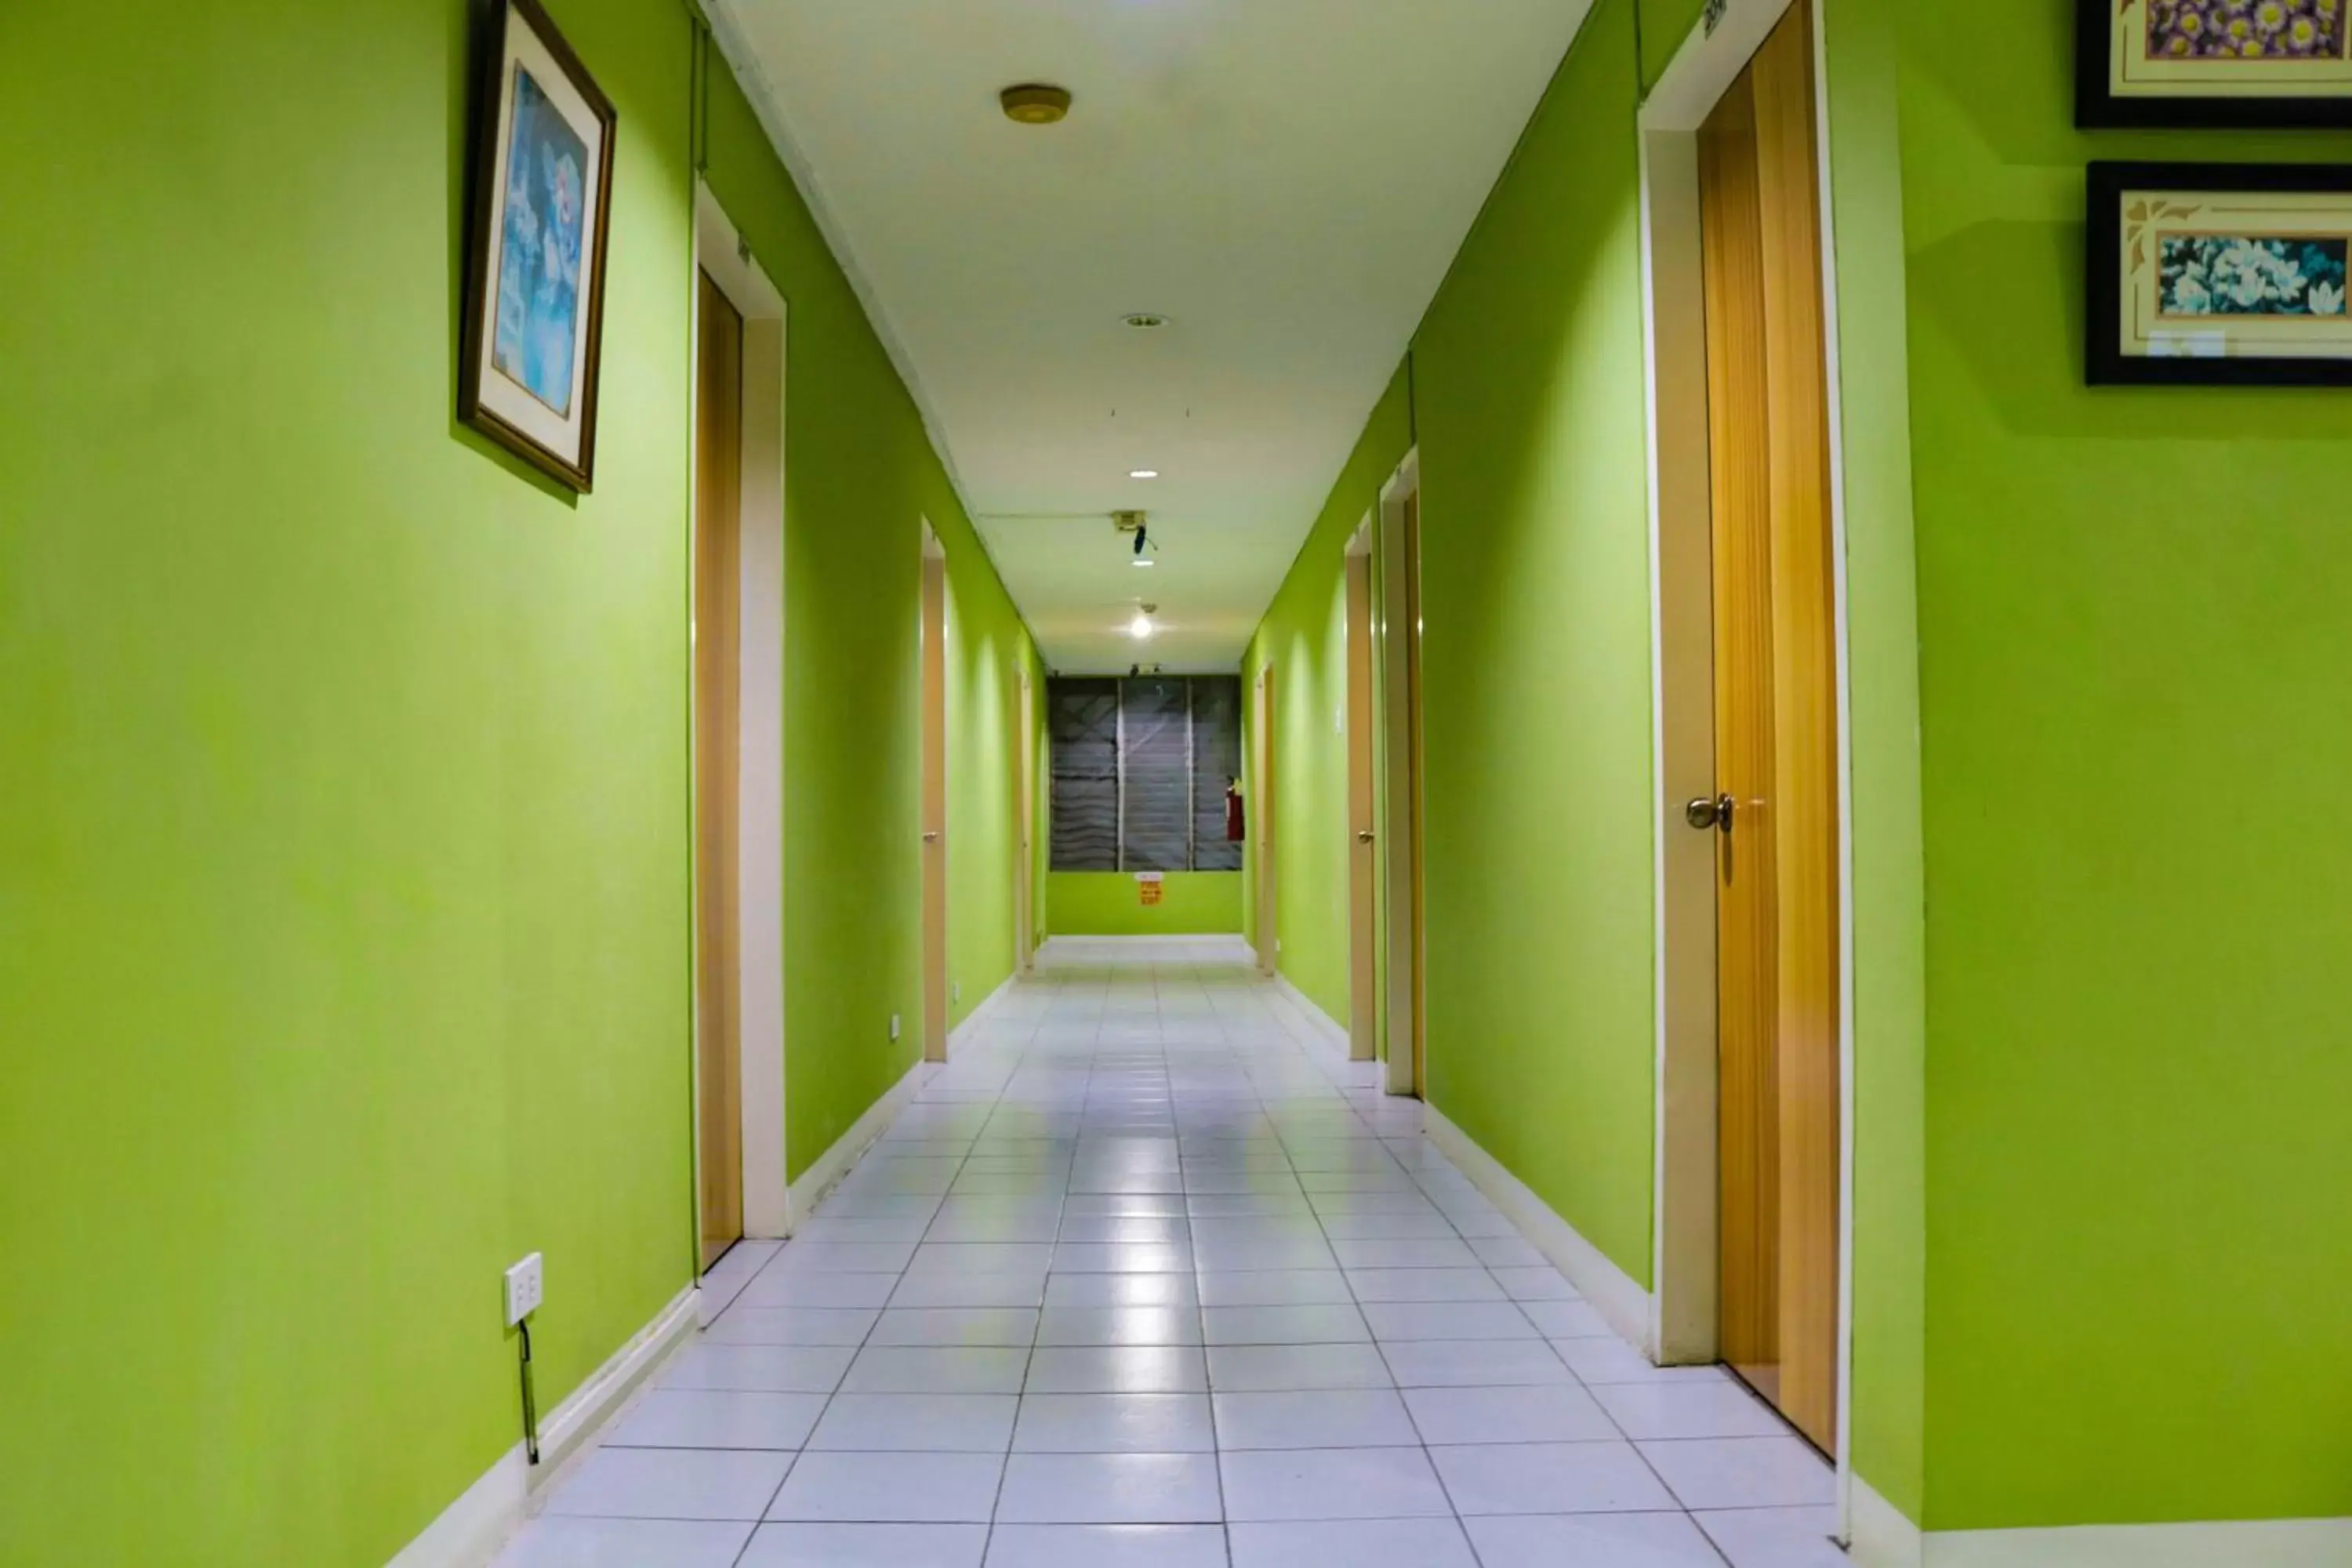 Area and facilities in RedDoorz @ Junquera Extension Cebu